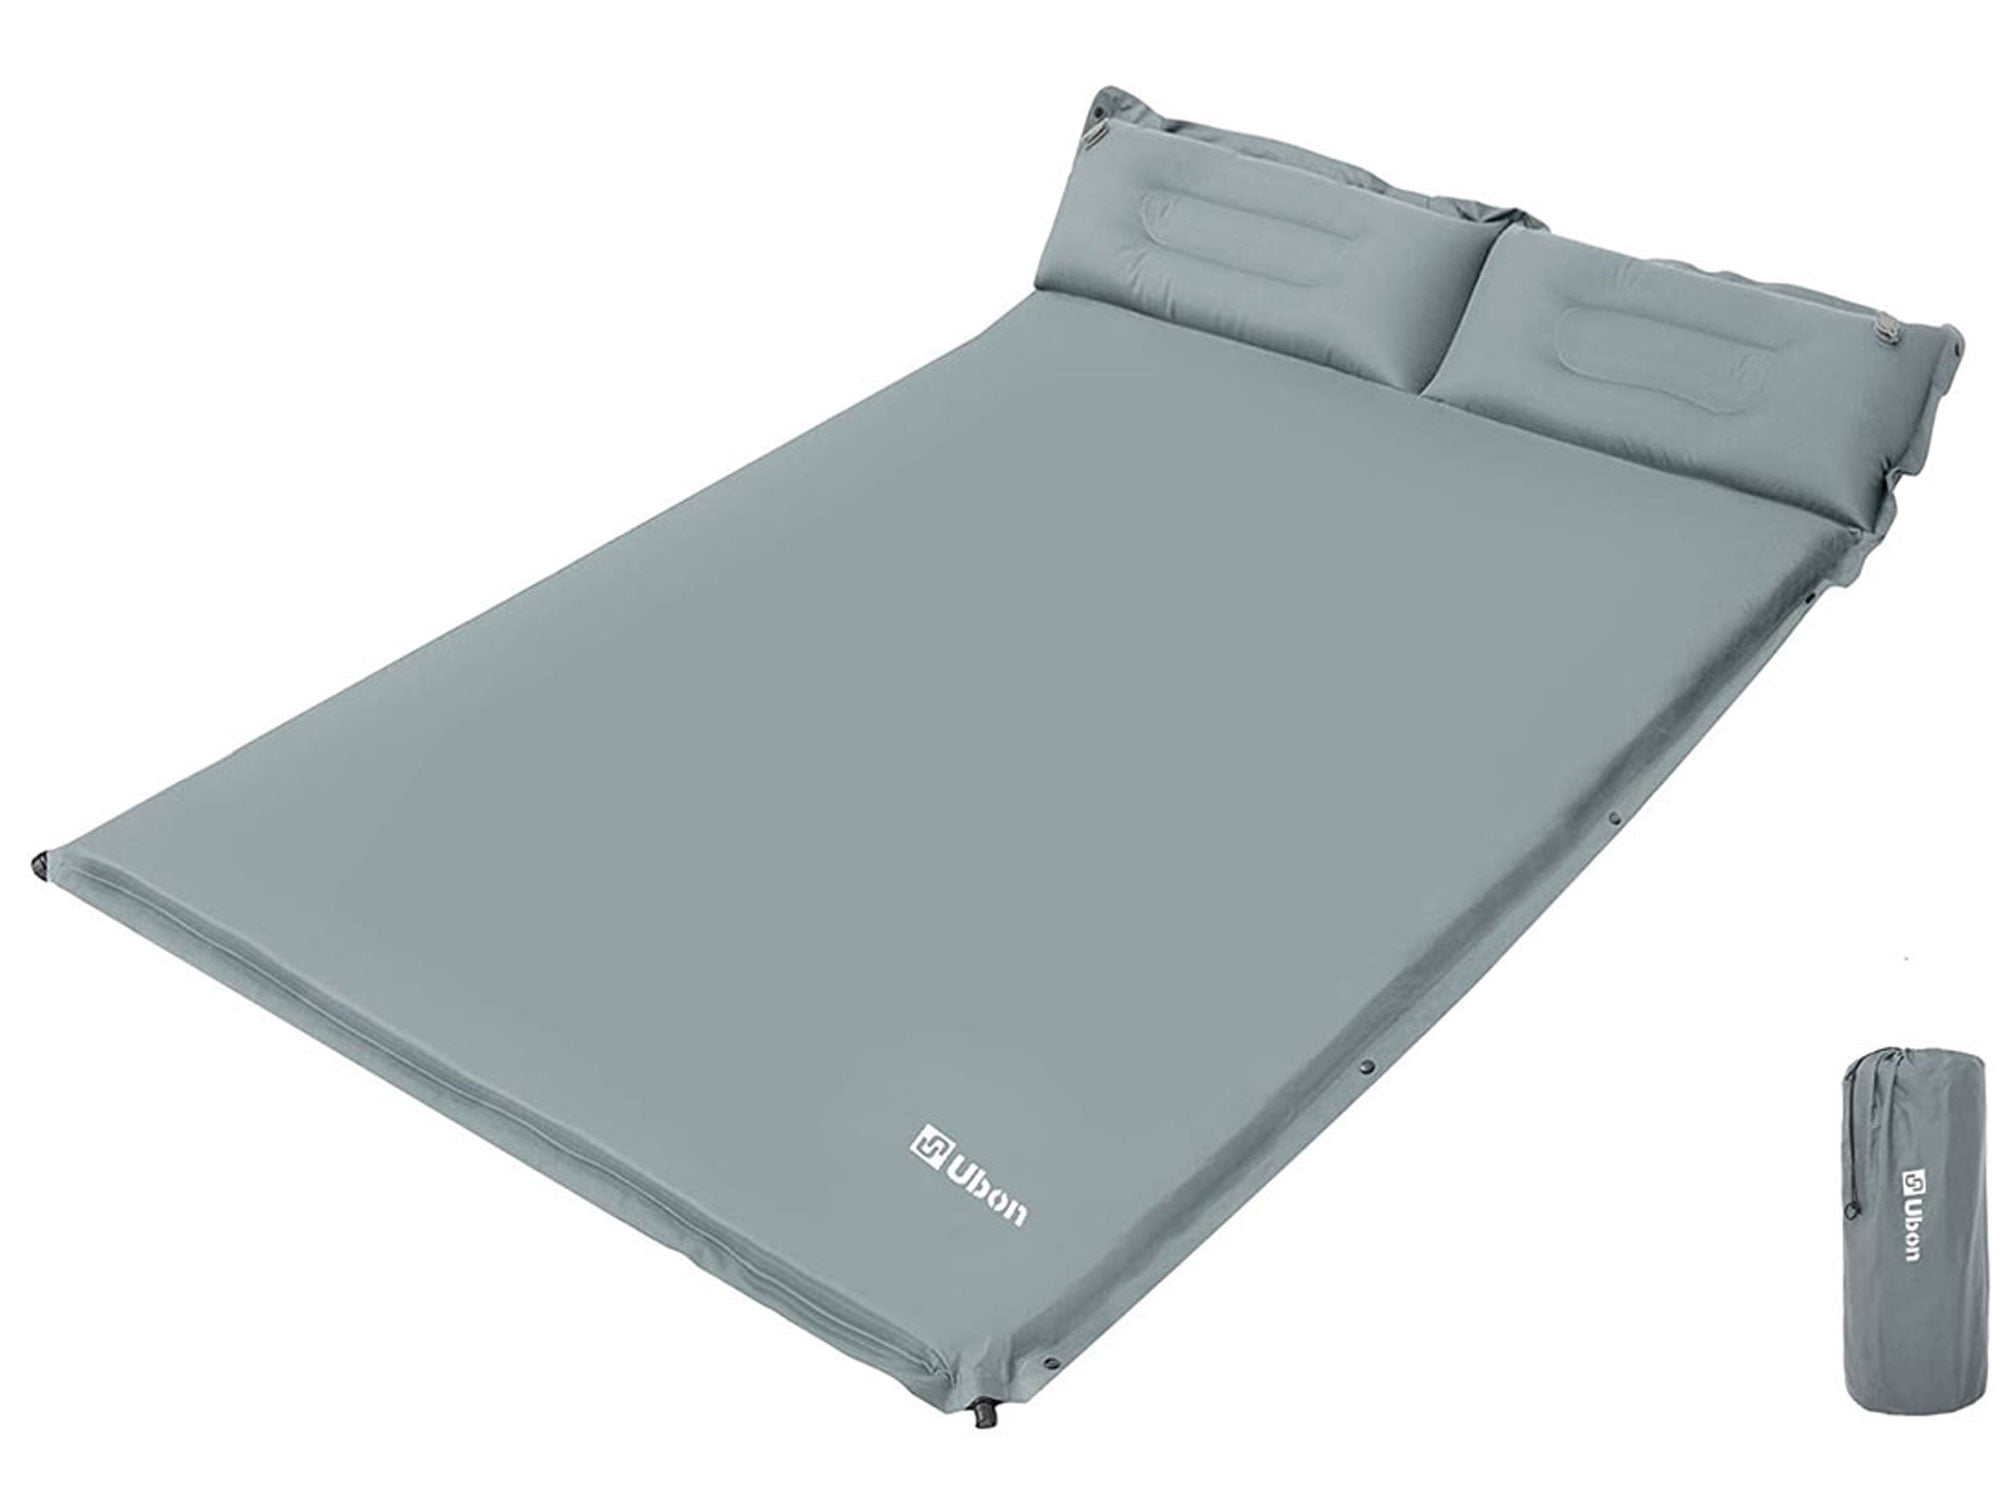 Ubon Double Self Inflating Camping Sleeping Pad Attach Pillows Camping Sleeping Mat